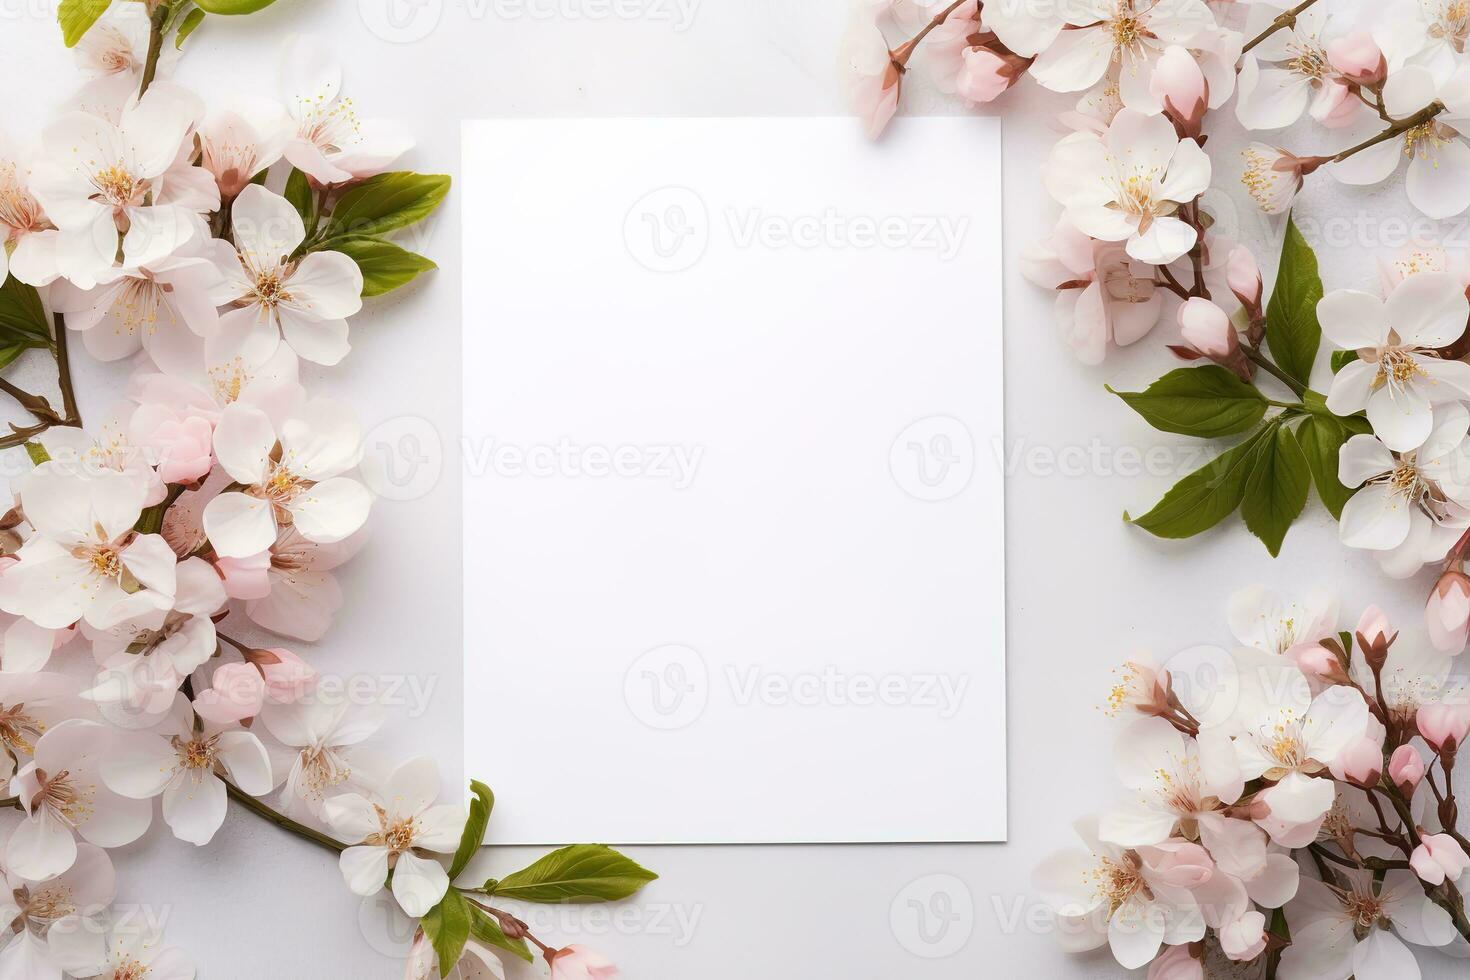 mooi bloem achtergrond mockup wit blanco rechthoekig kaart omringd door kers bloesems foto